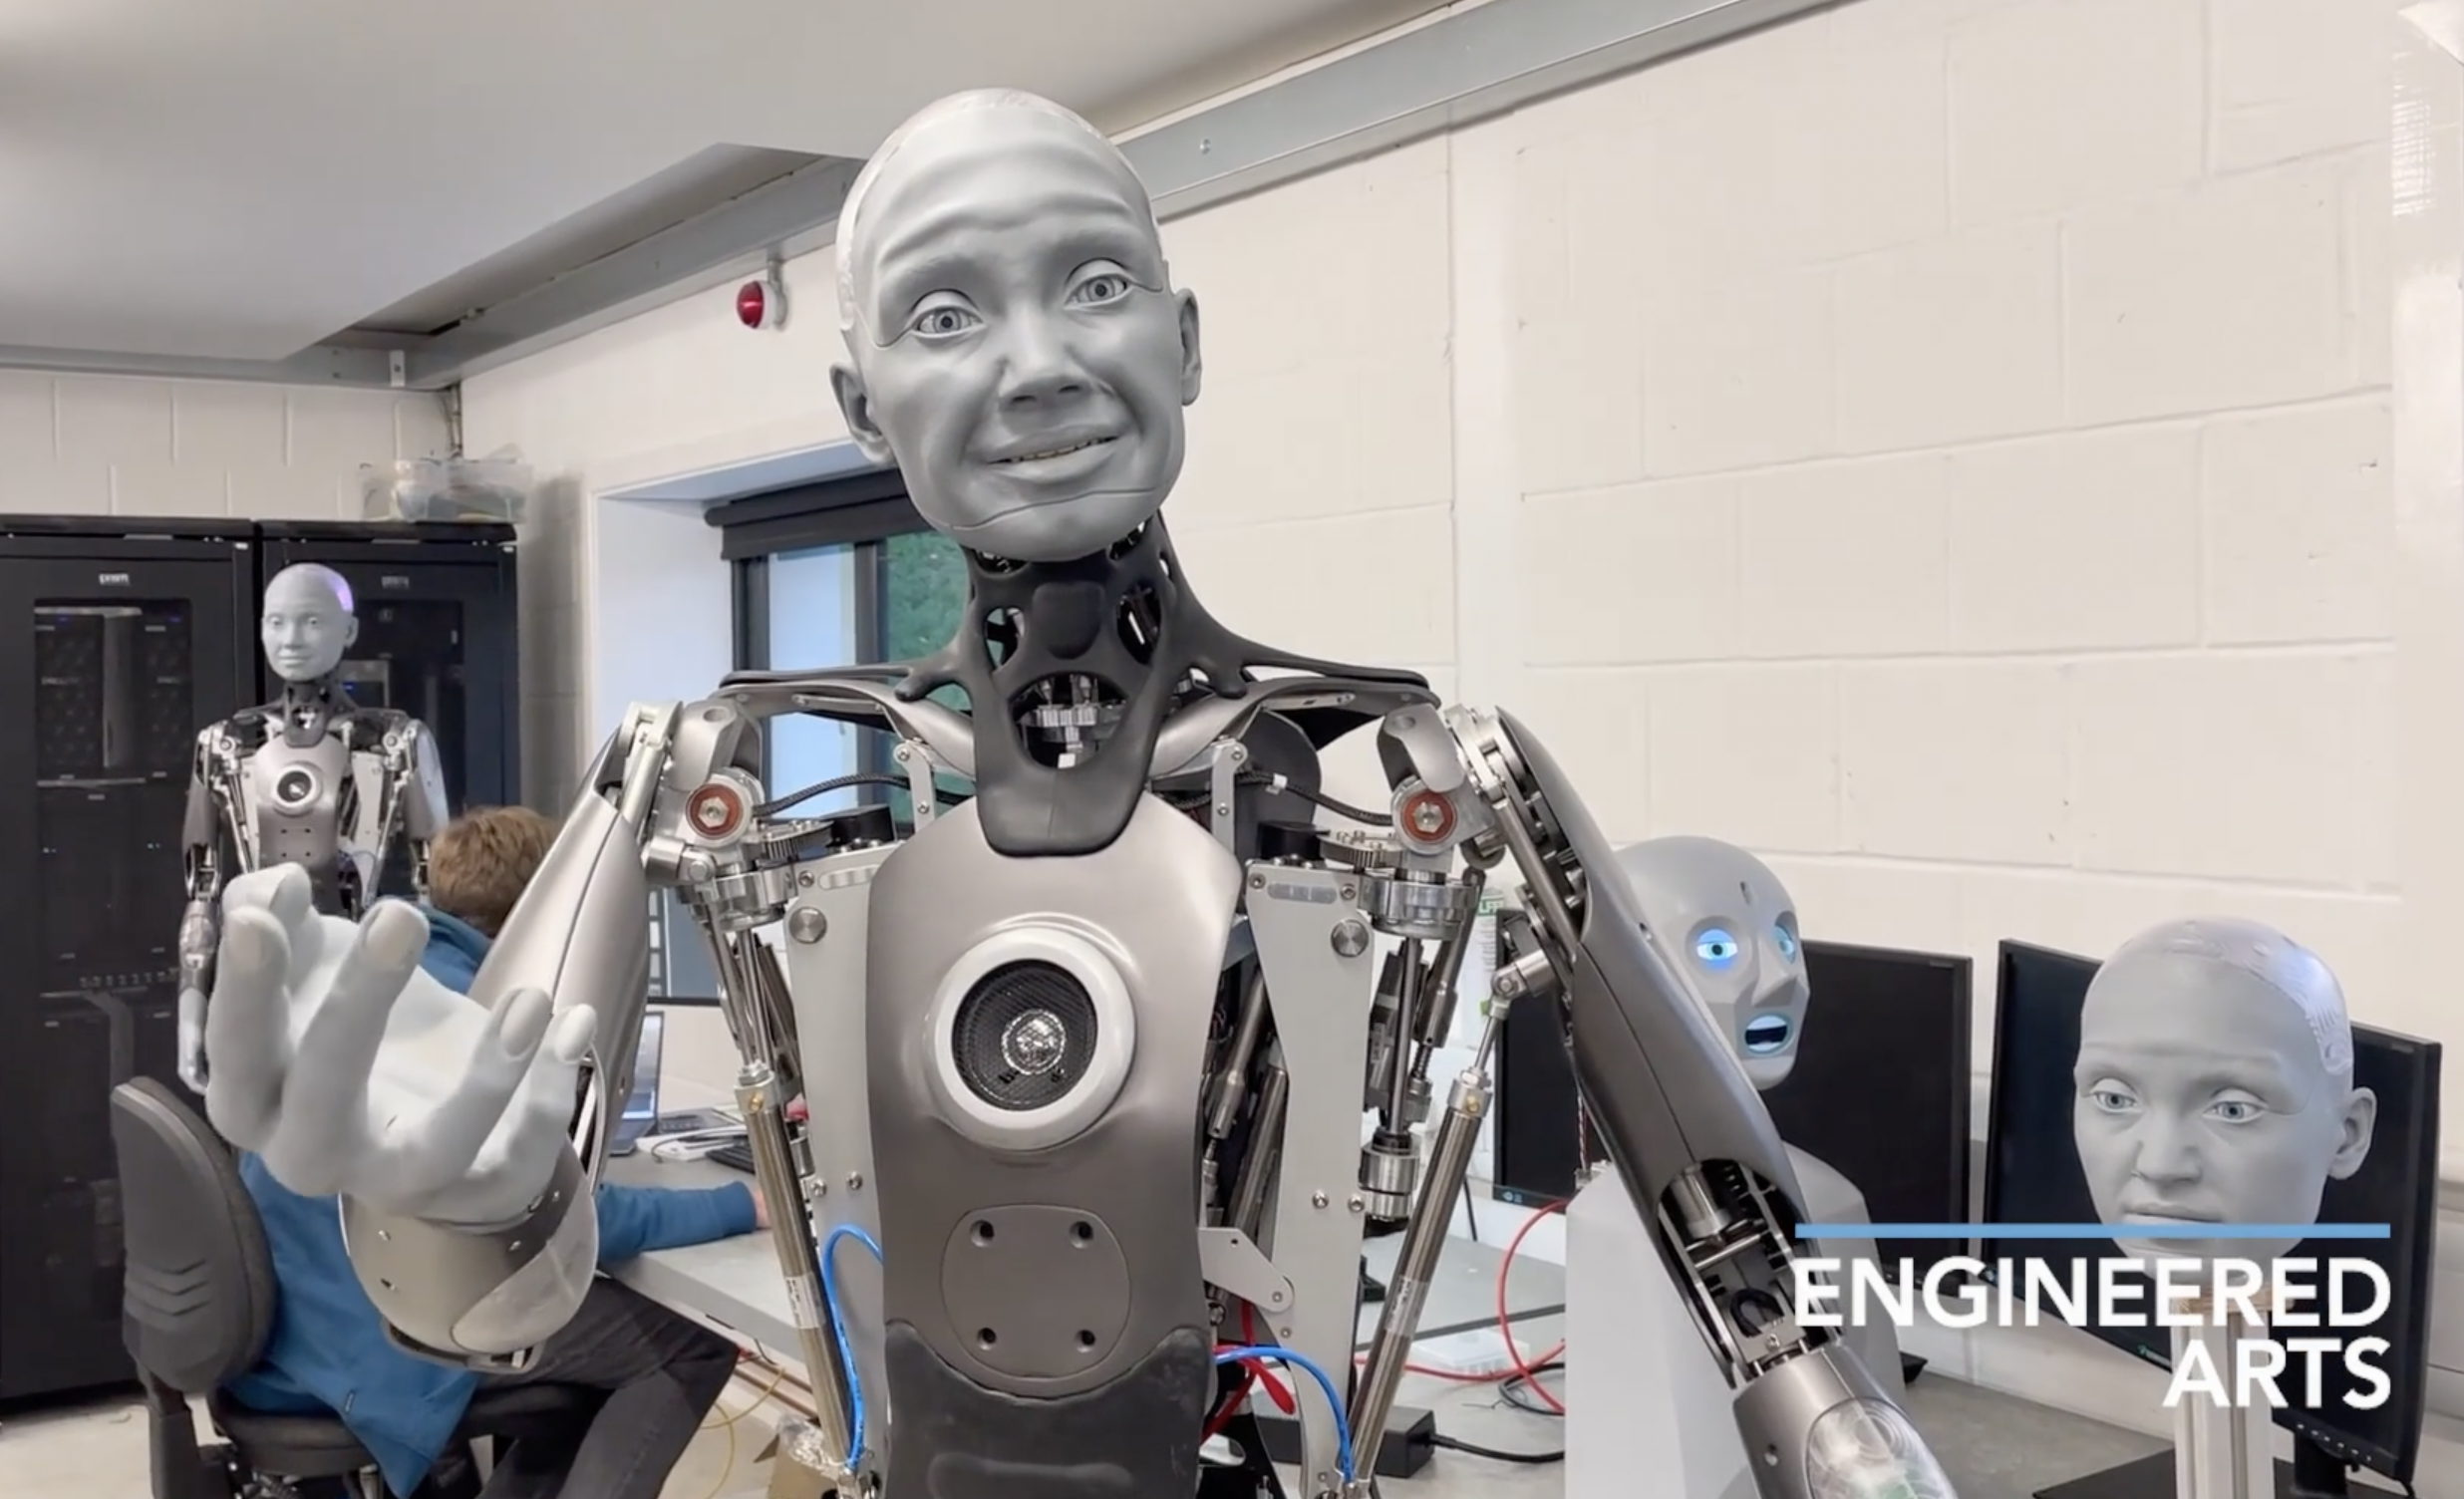 Engineered Art's "Ameca" robot